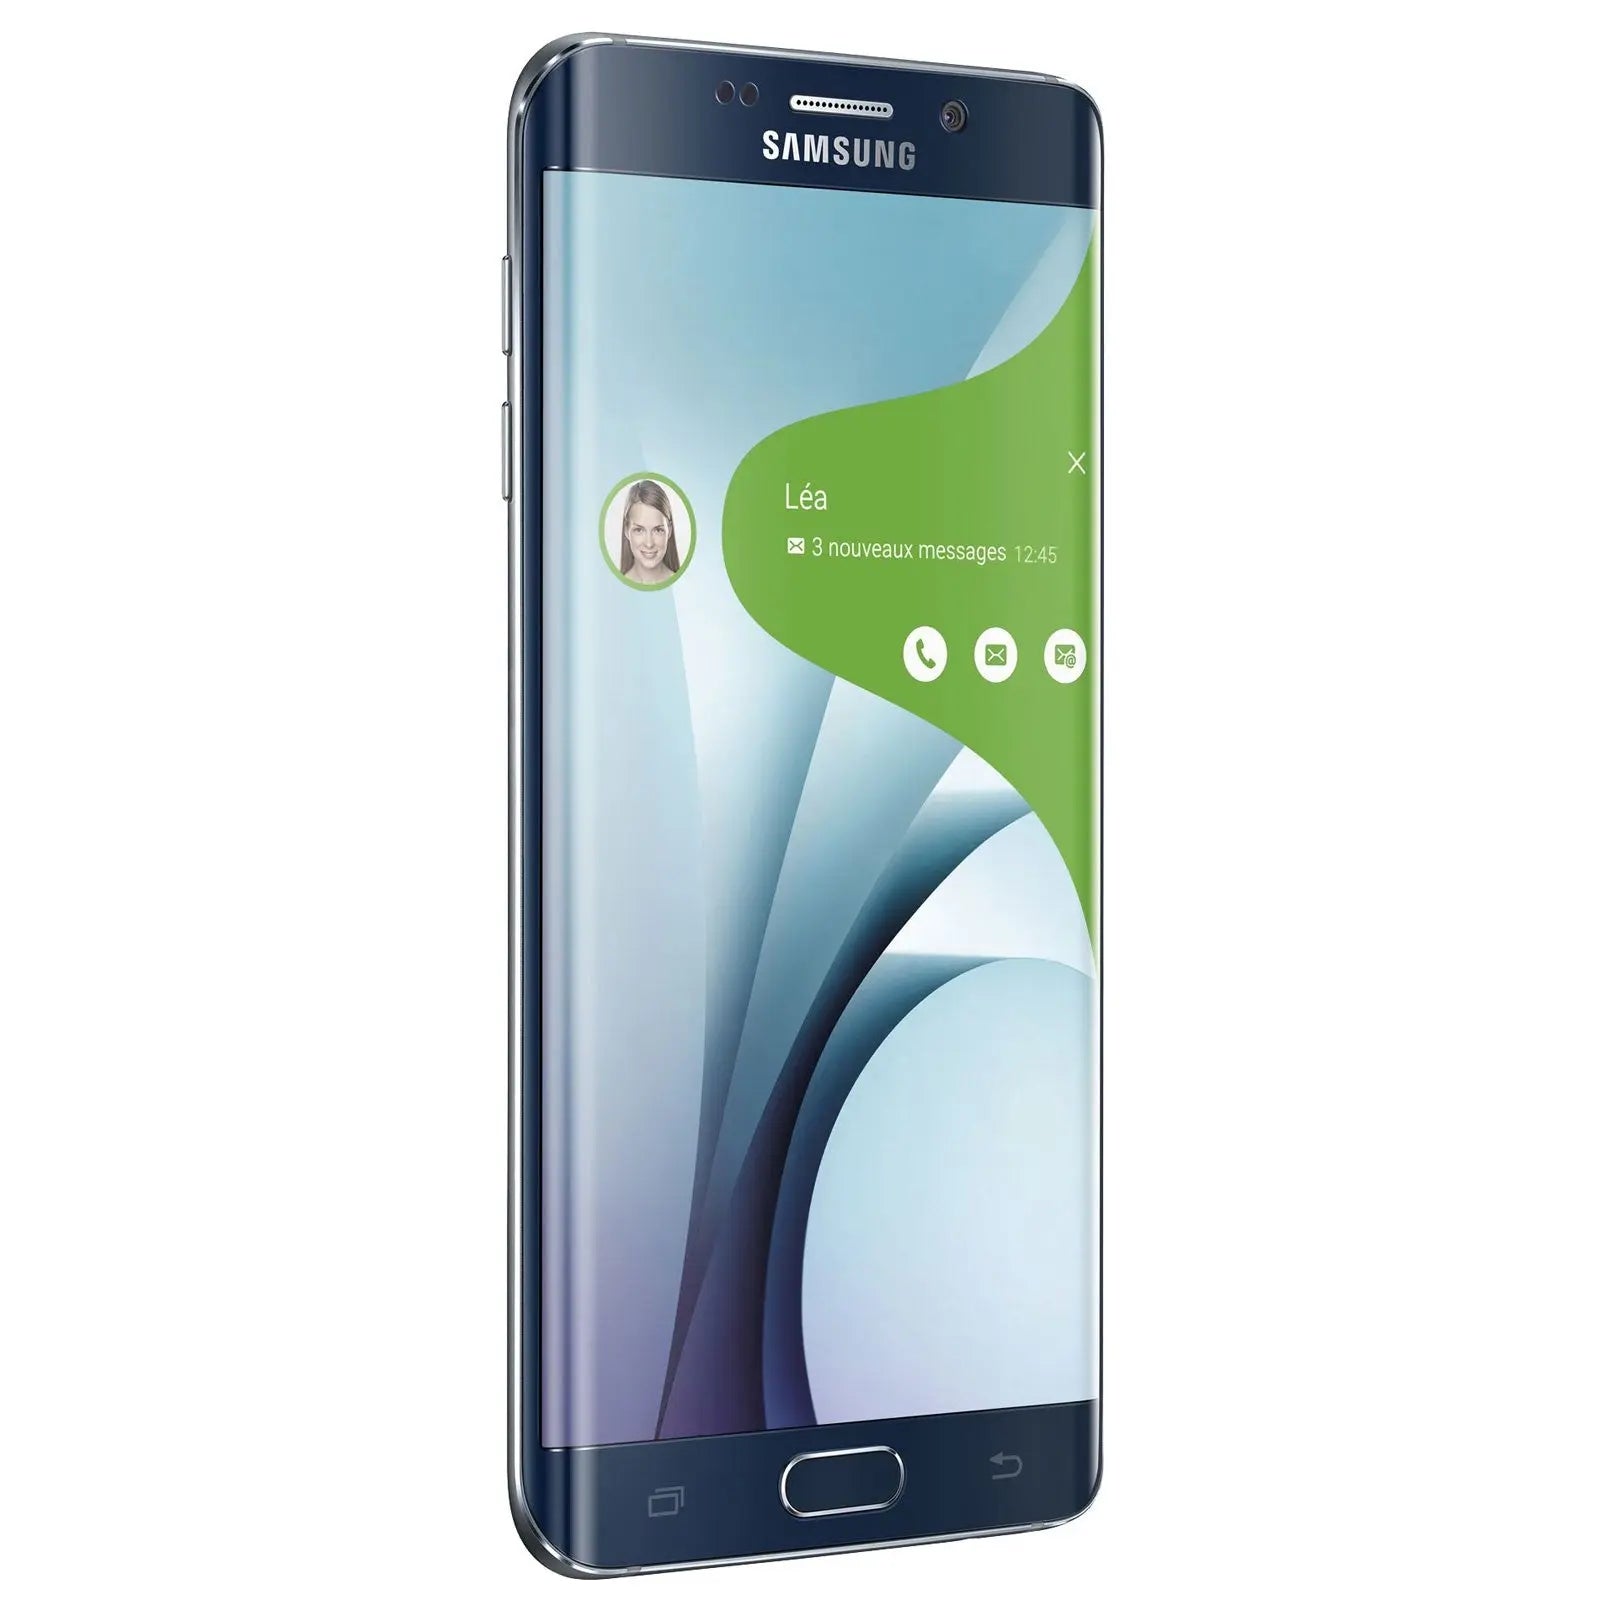 Smartphone Samsung Galaxy S6 Edge + (Saphir noir) - 32Go Samsung